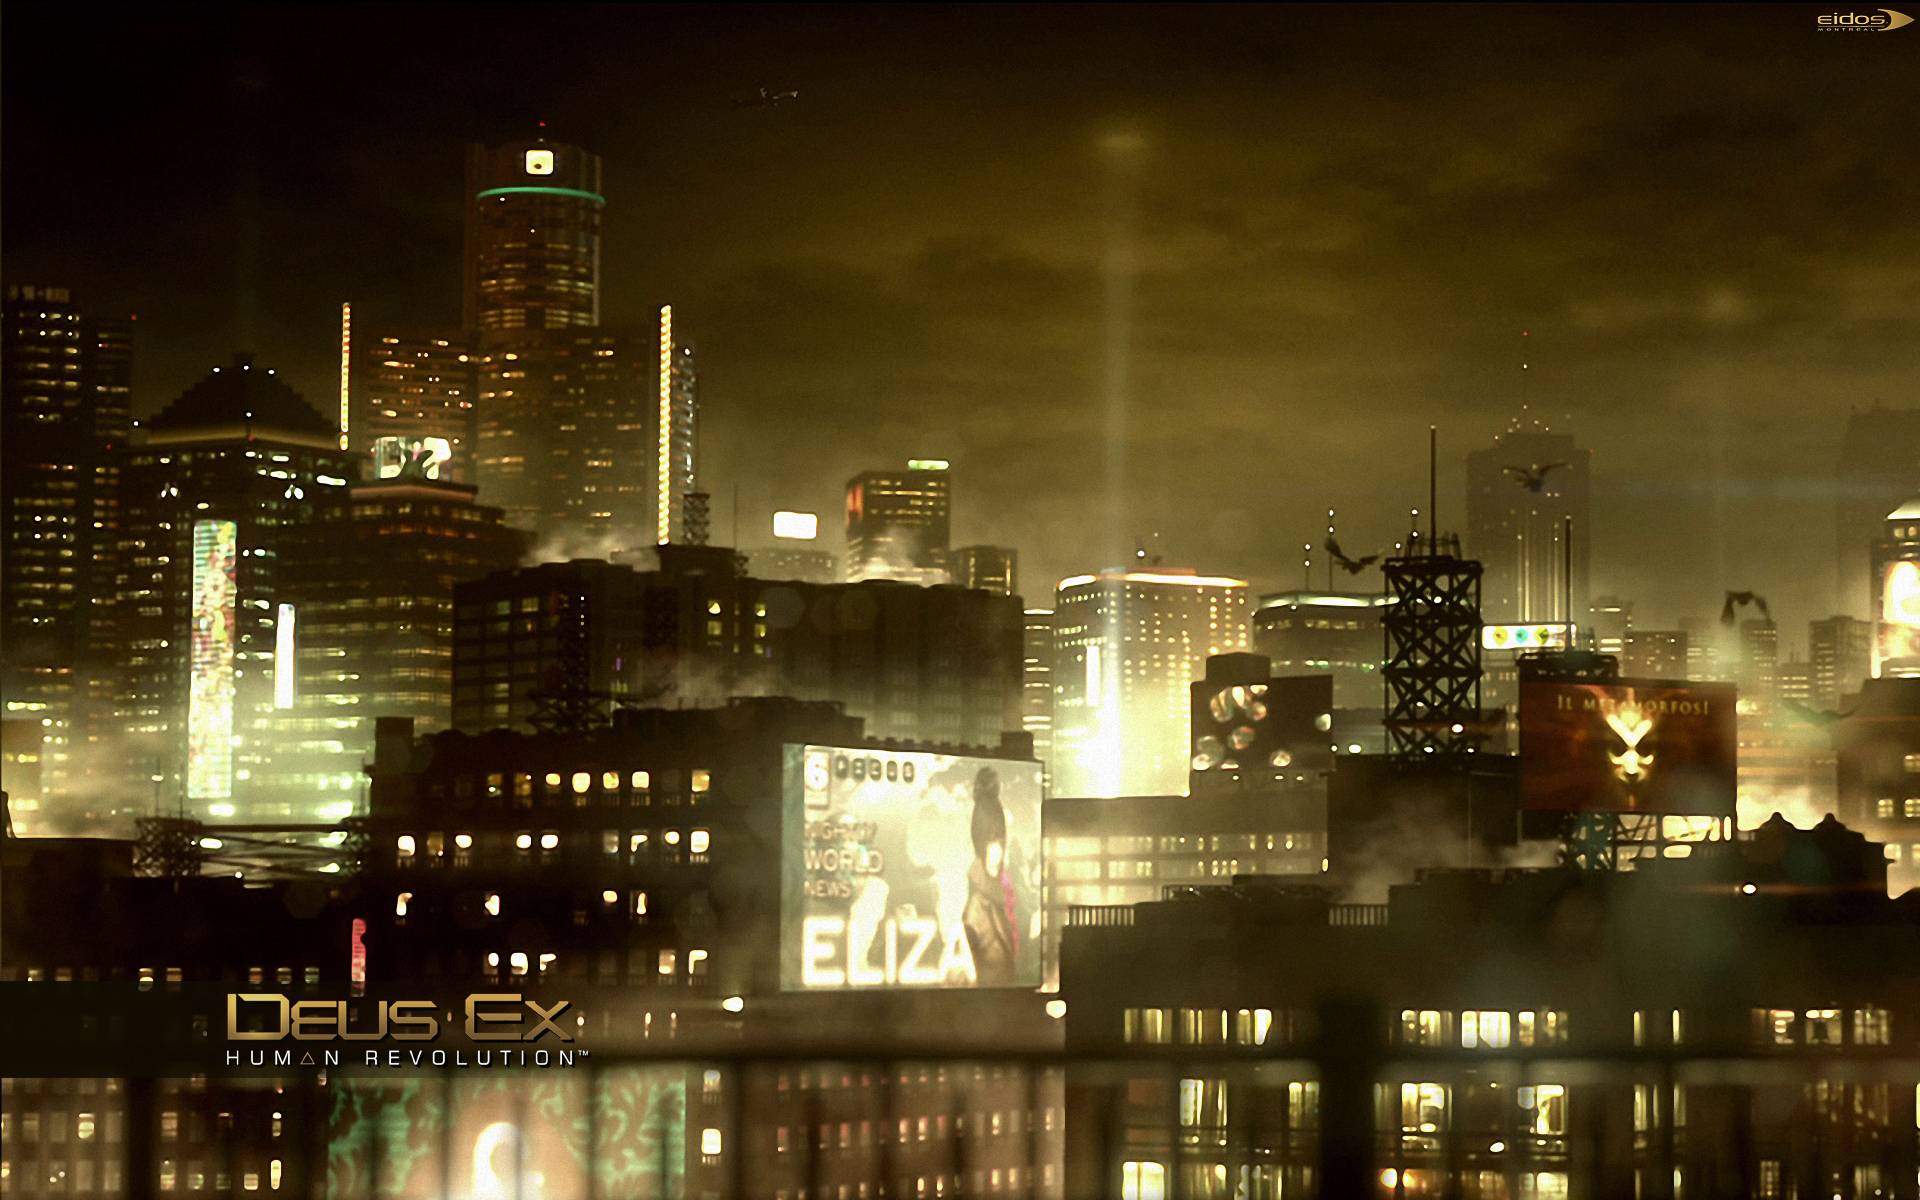 SQUARE ENIX Deus Ex Human Revolution (PS3 Game). Buy online